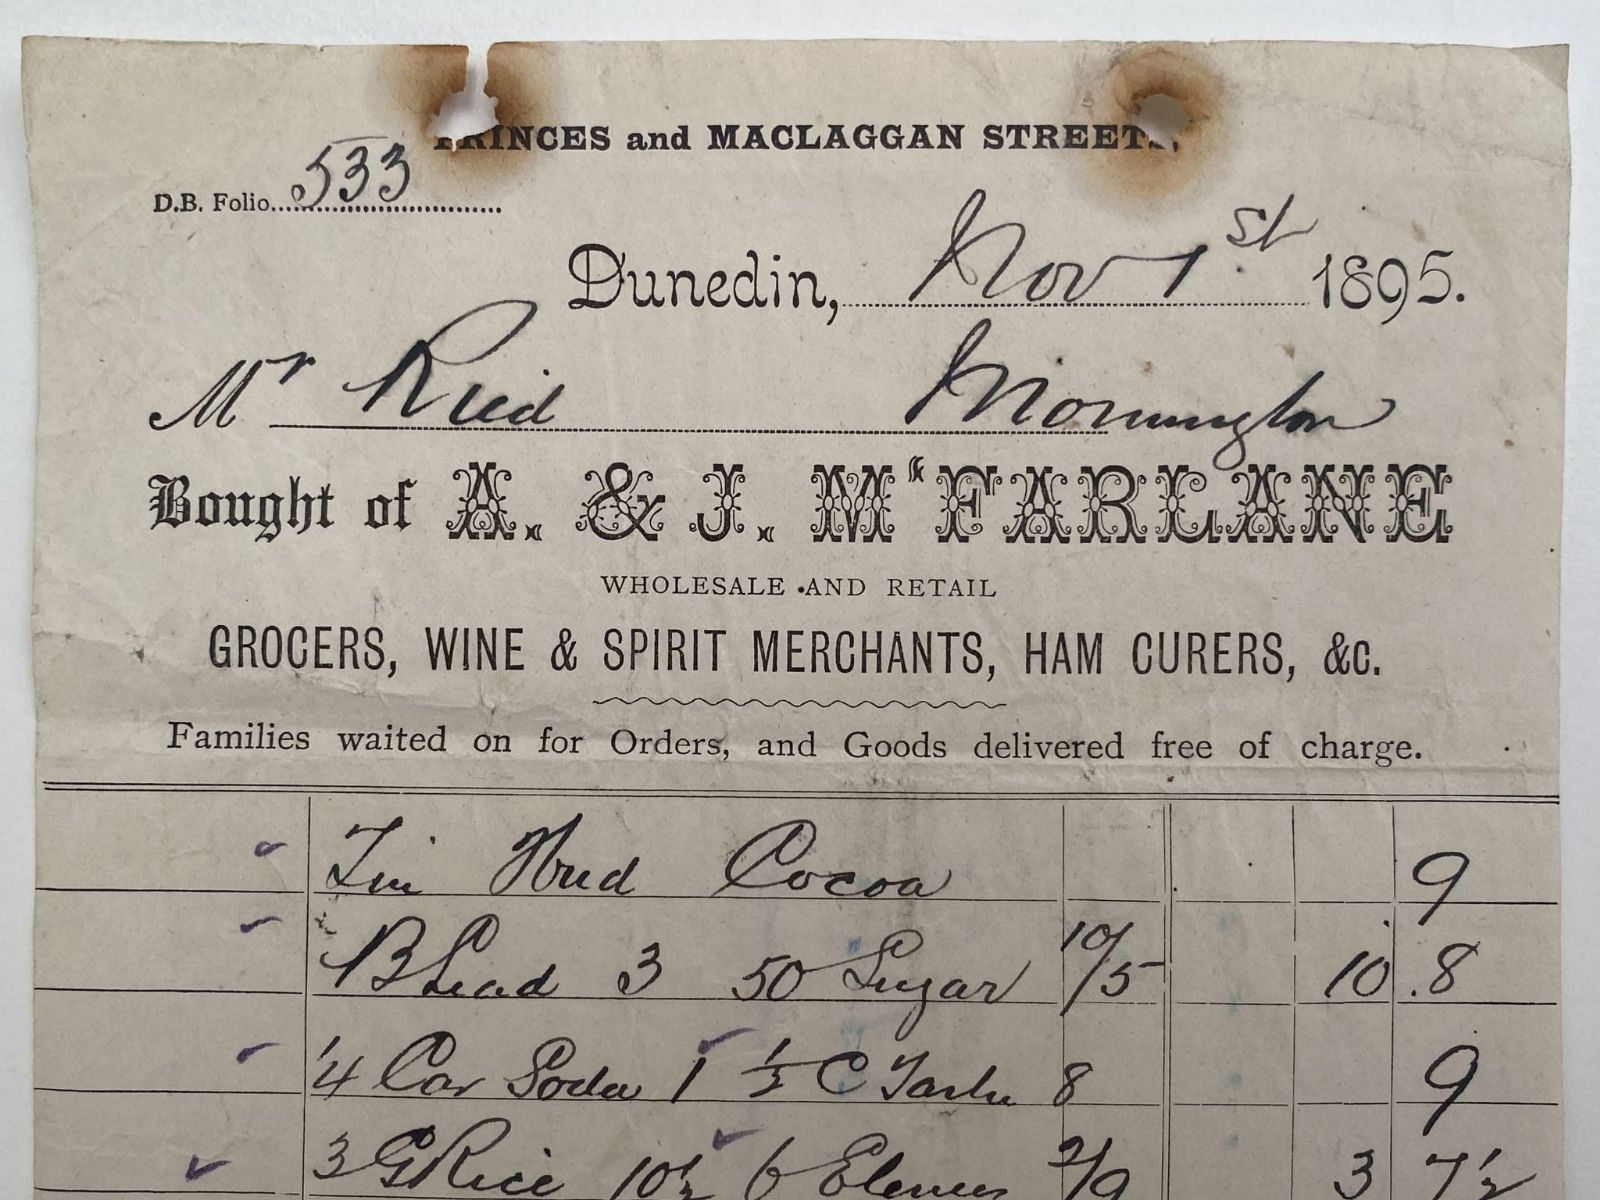 OLD INVOICE: A & J McFarlane, Dunedin - Grocers Wine & Spirits 1895 (127 yo)